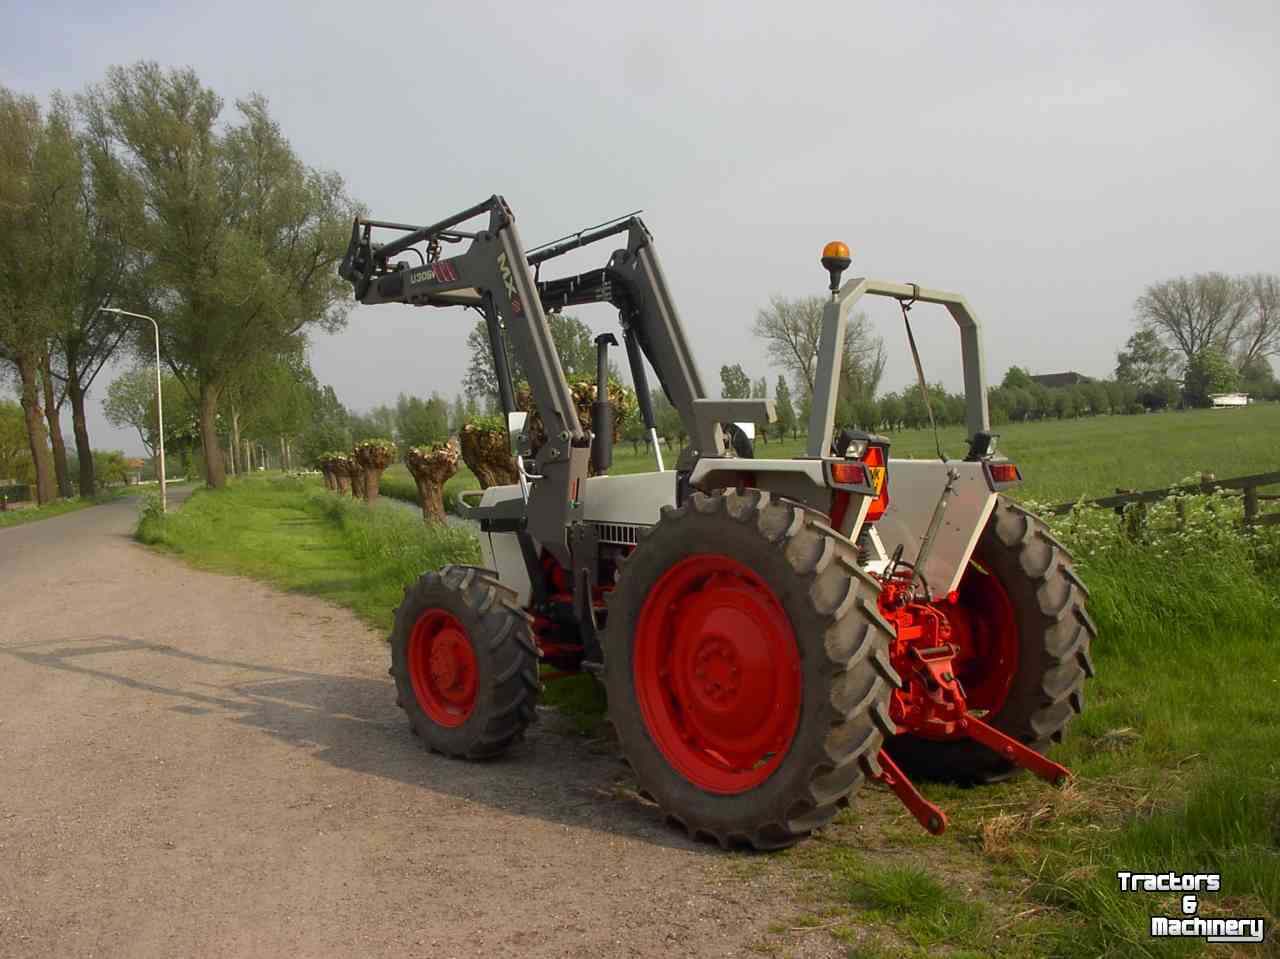 Tracteurs Case 1390 - 4 wd